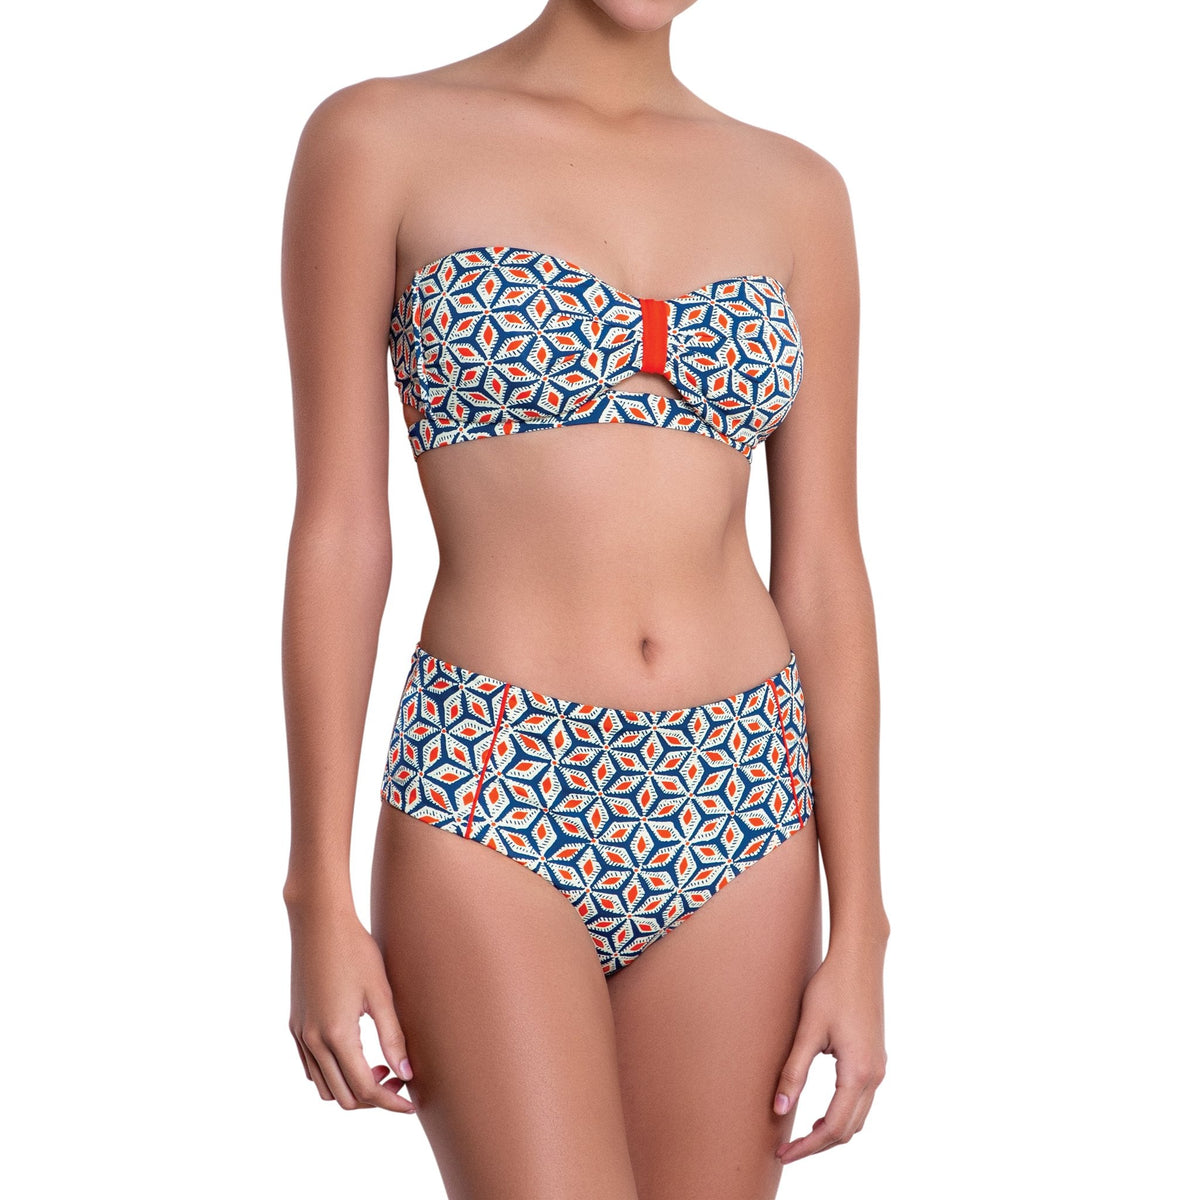 B√âR√âNICE bandeau bra, printed bikini top by ALMA swimwear ‚Äì front view 4